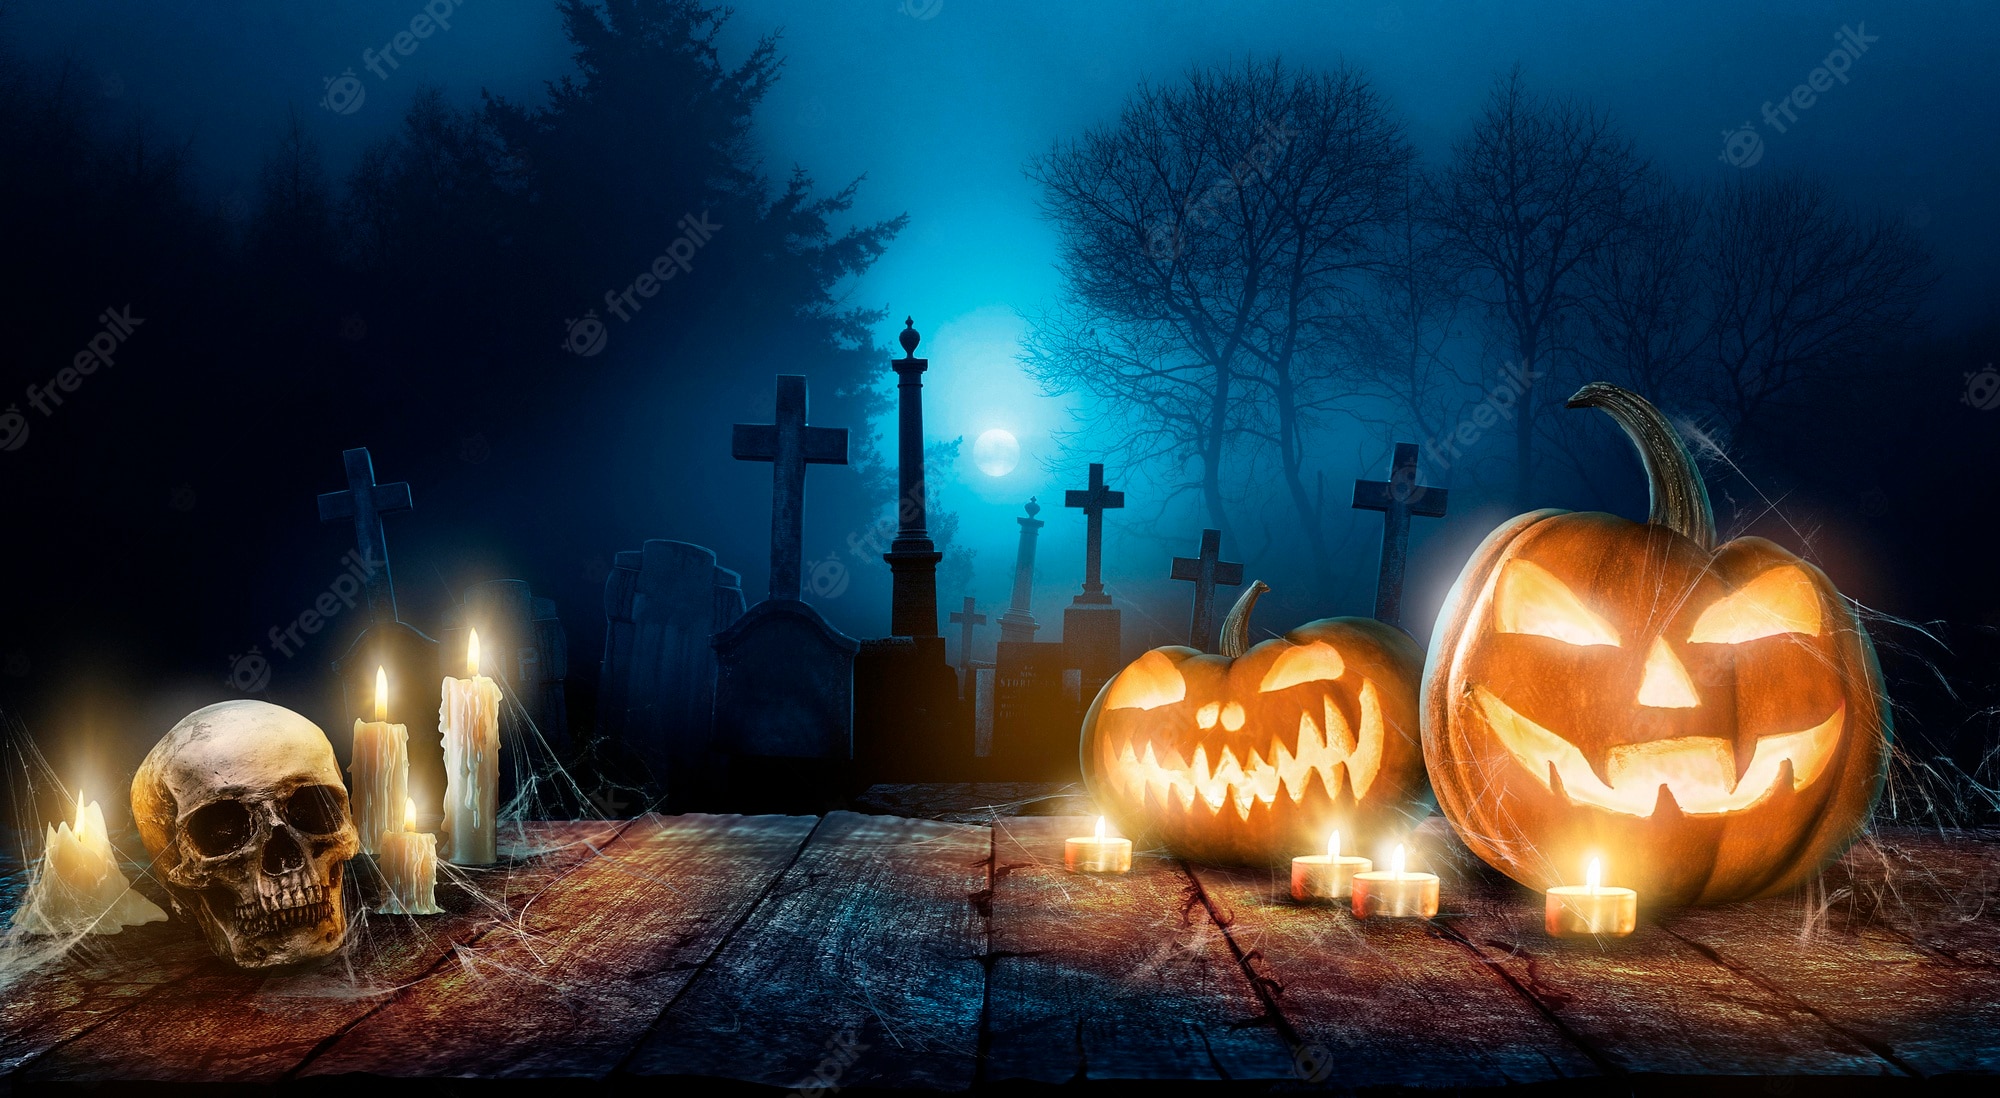 Premium Photo. Halloween wallpaper with evil pumpkins